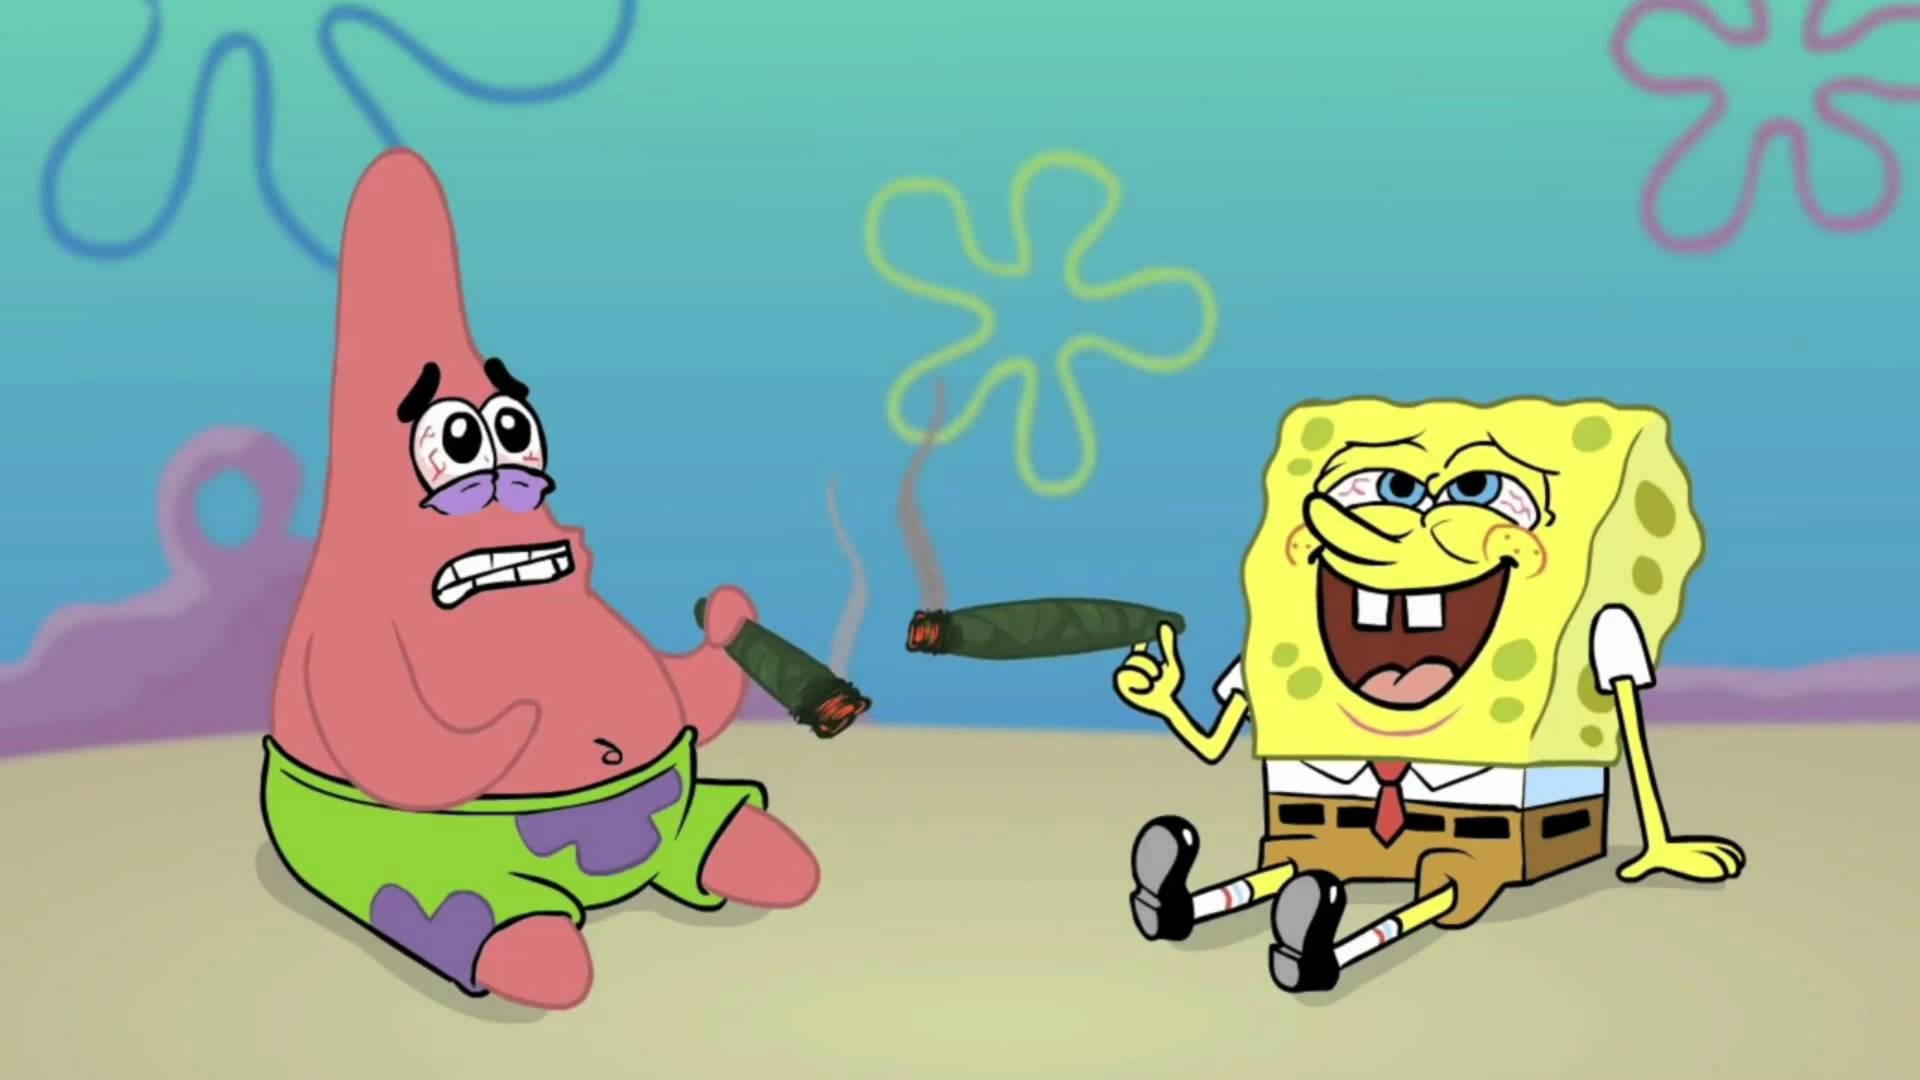 SpongeBob SquarePants  Patrick Star hugging each other